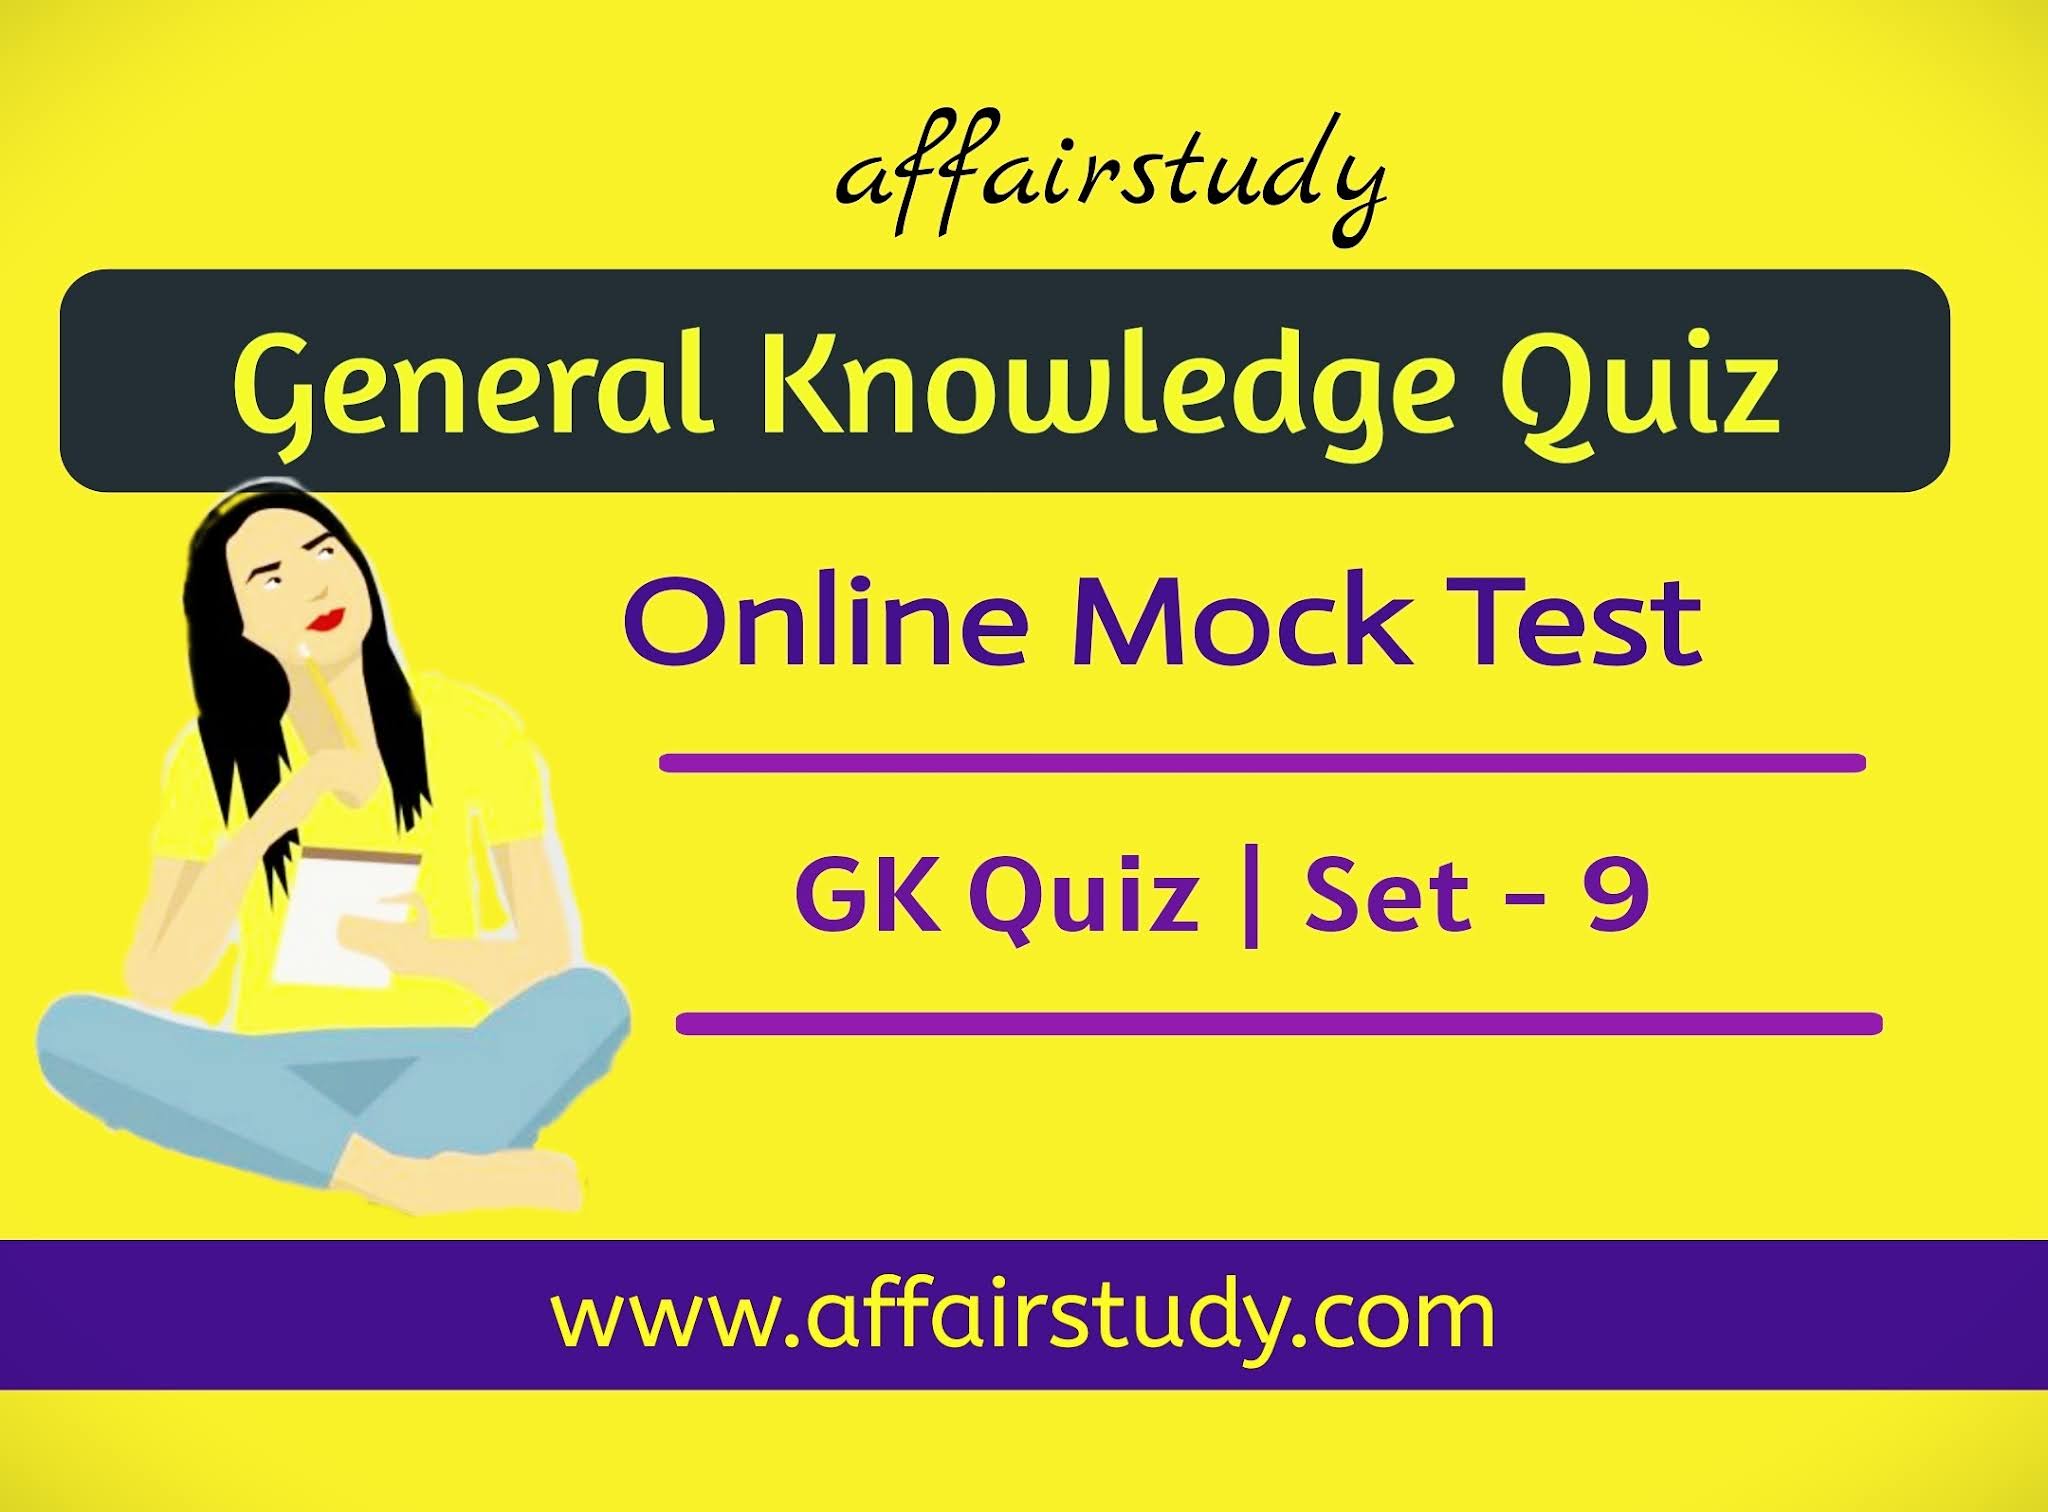 General Knowledge MCQ Quiz